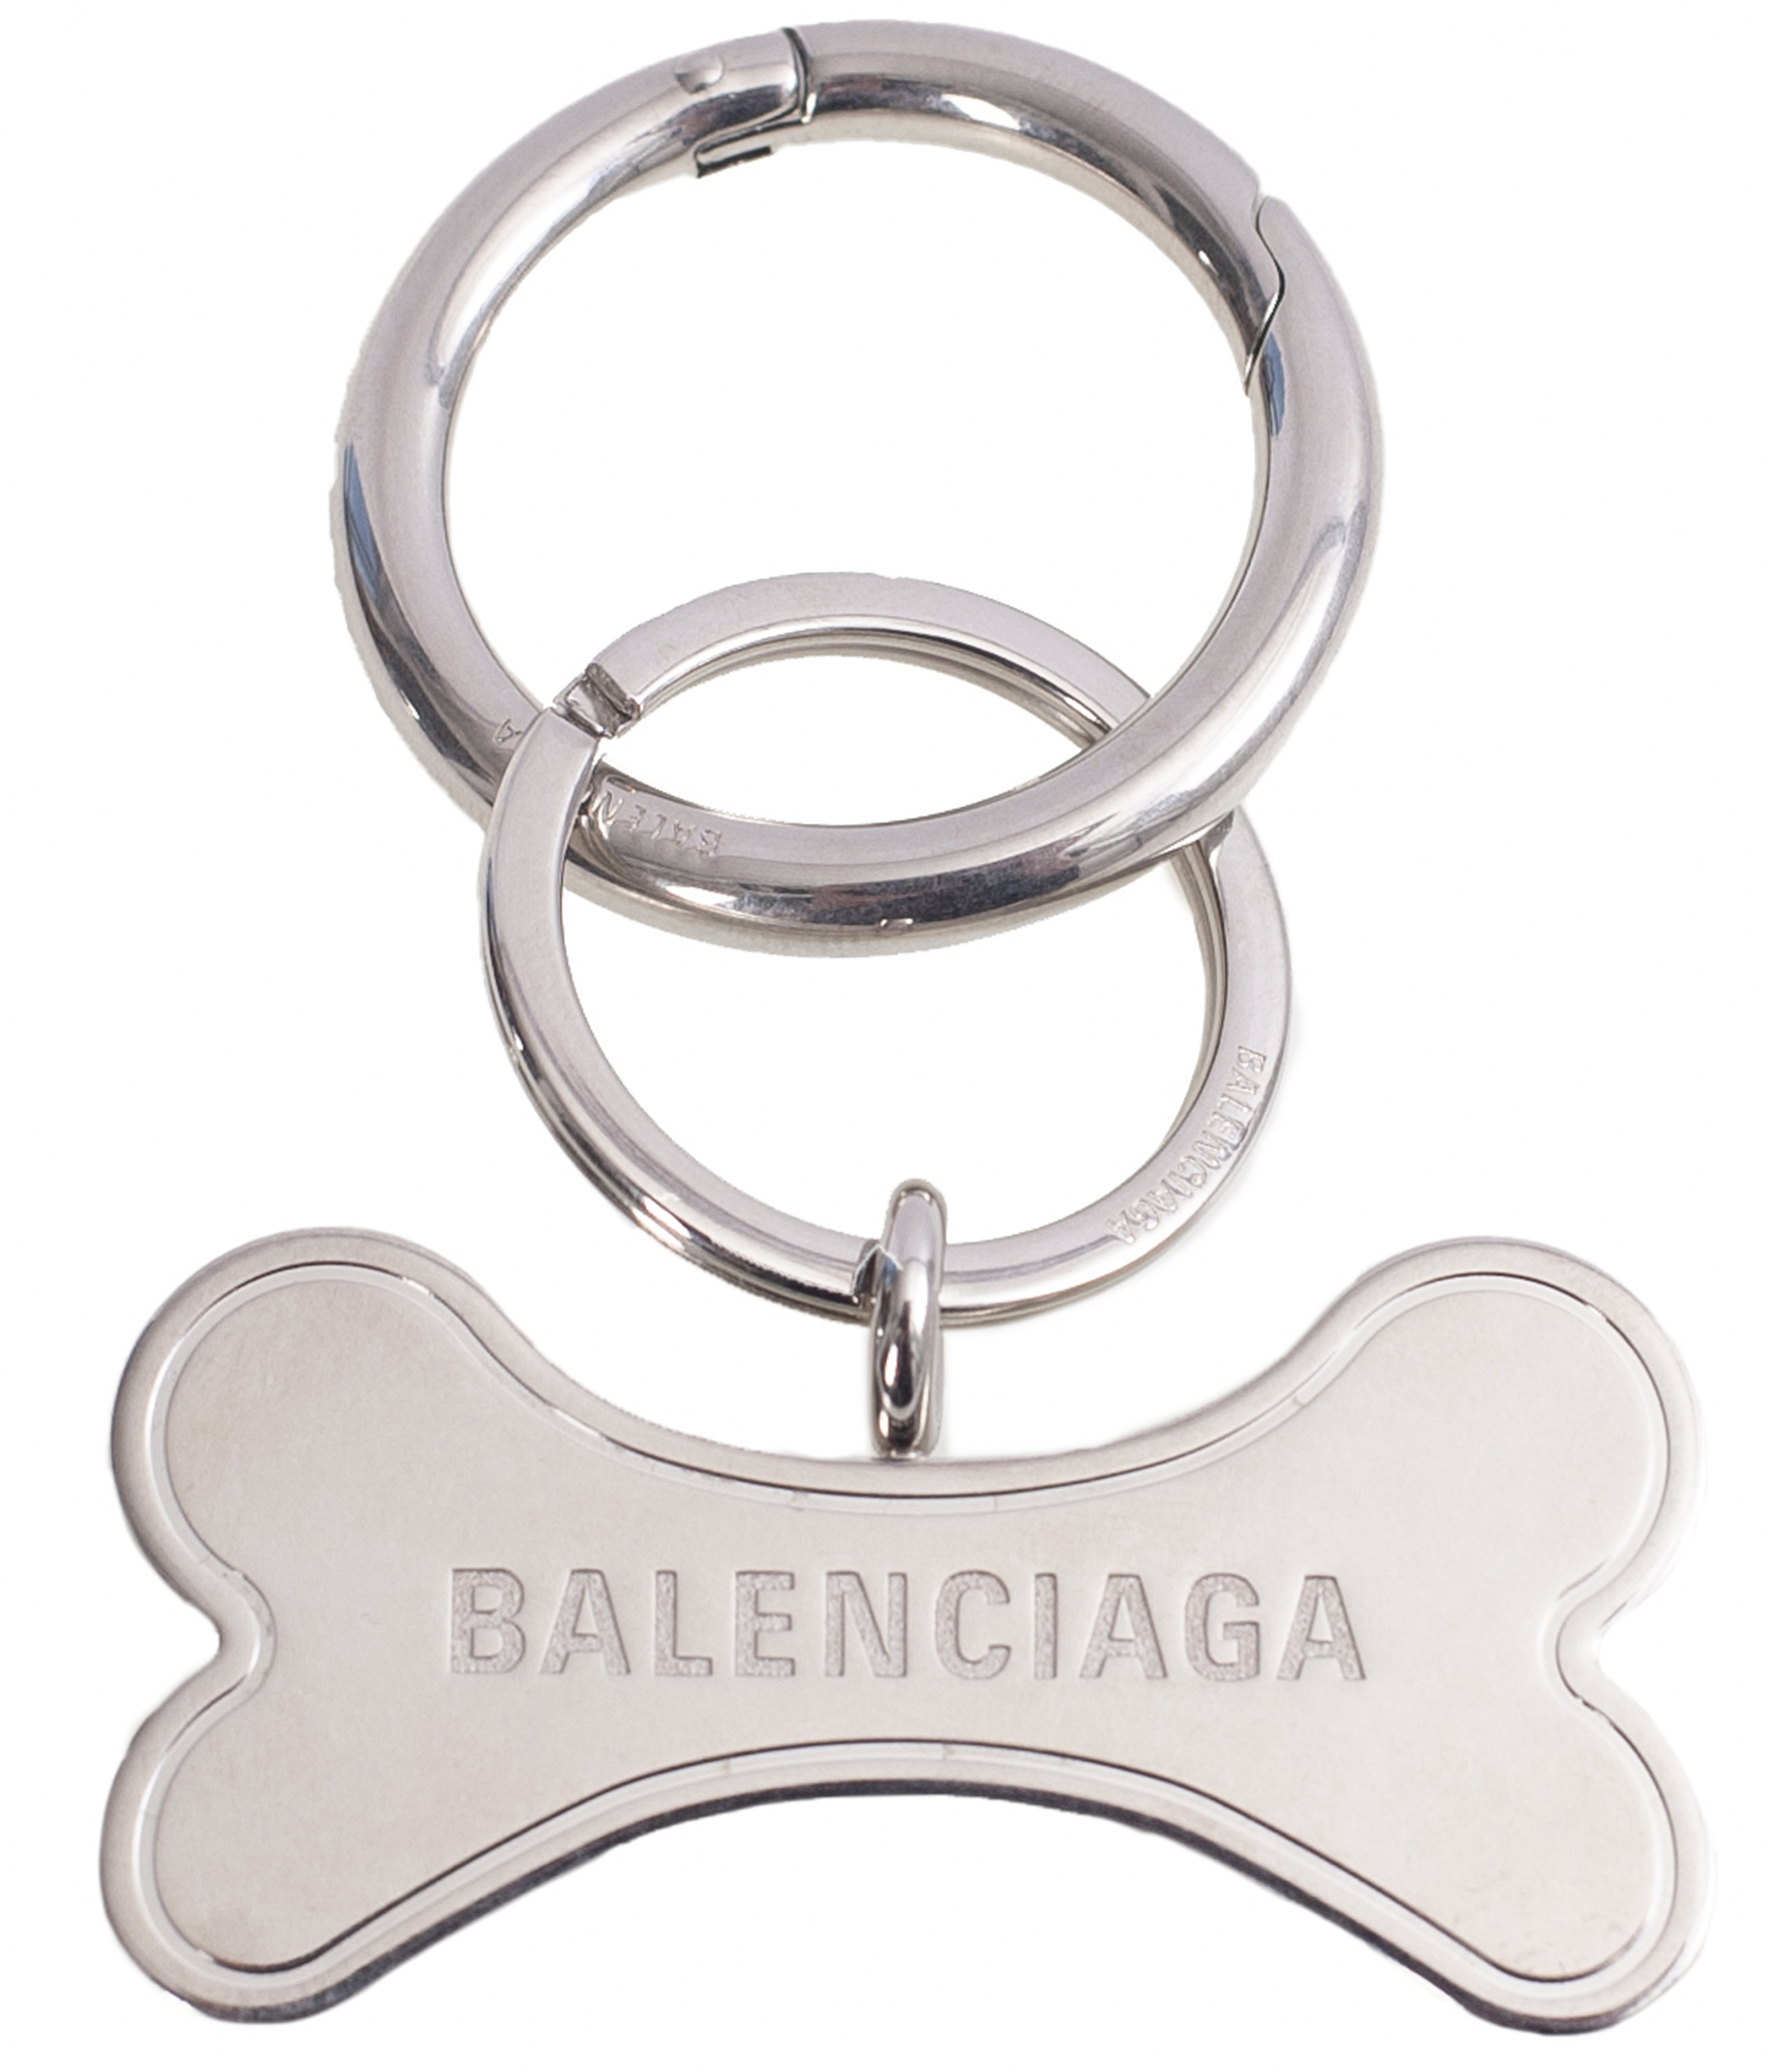 Balenciaga Keychain With Charm